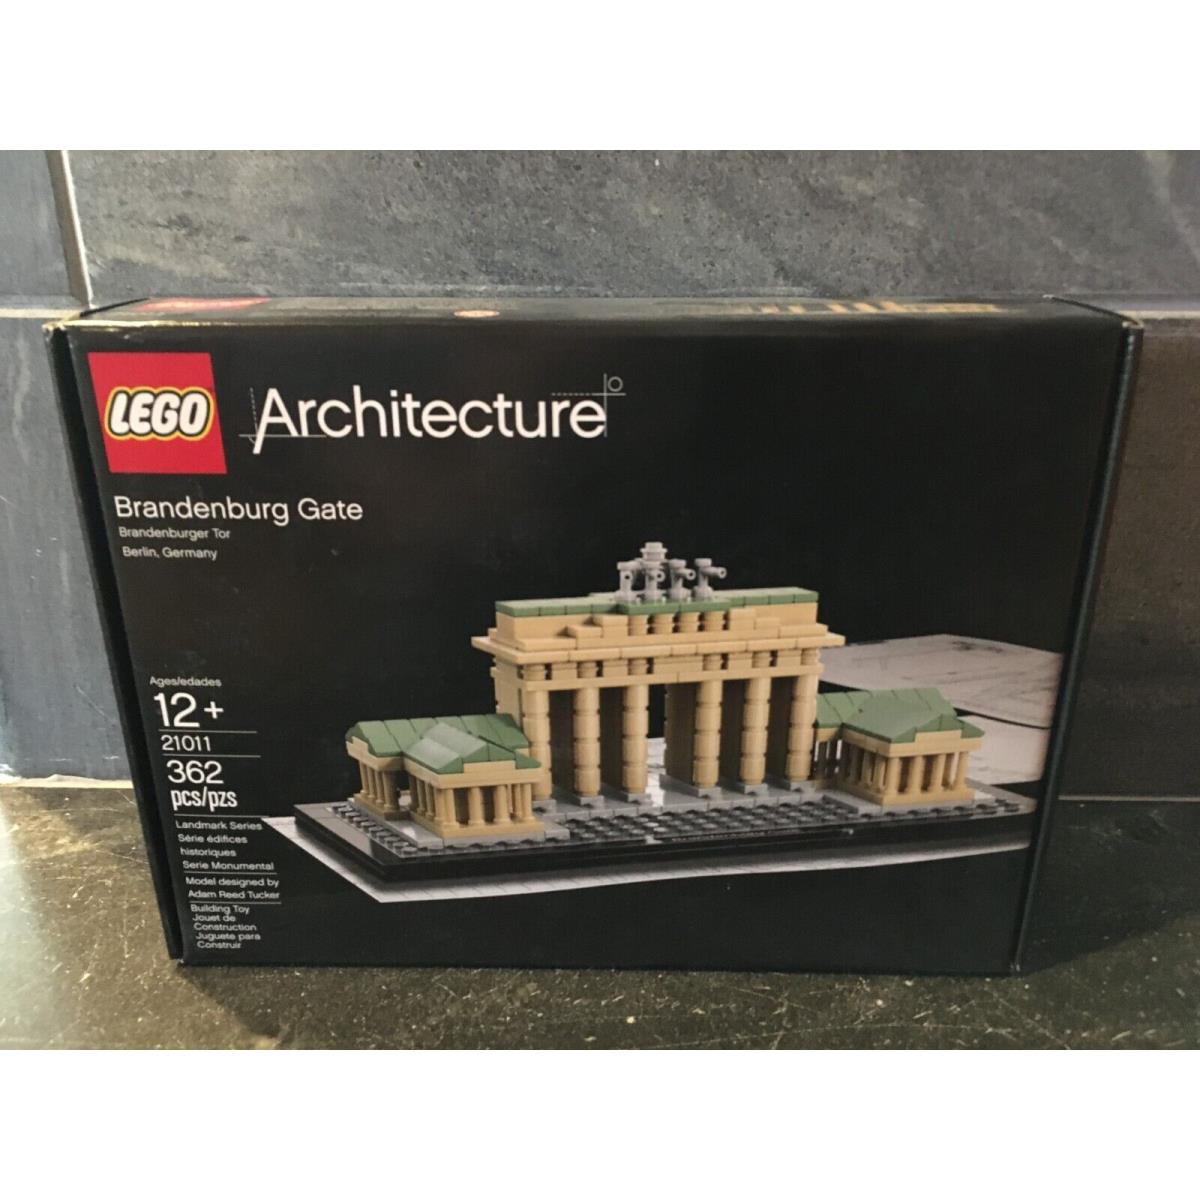 Lego 21011 Architecture Brandenburg Gate and Sealed